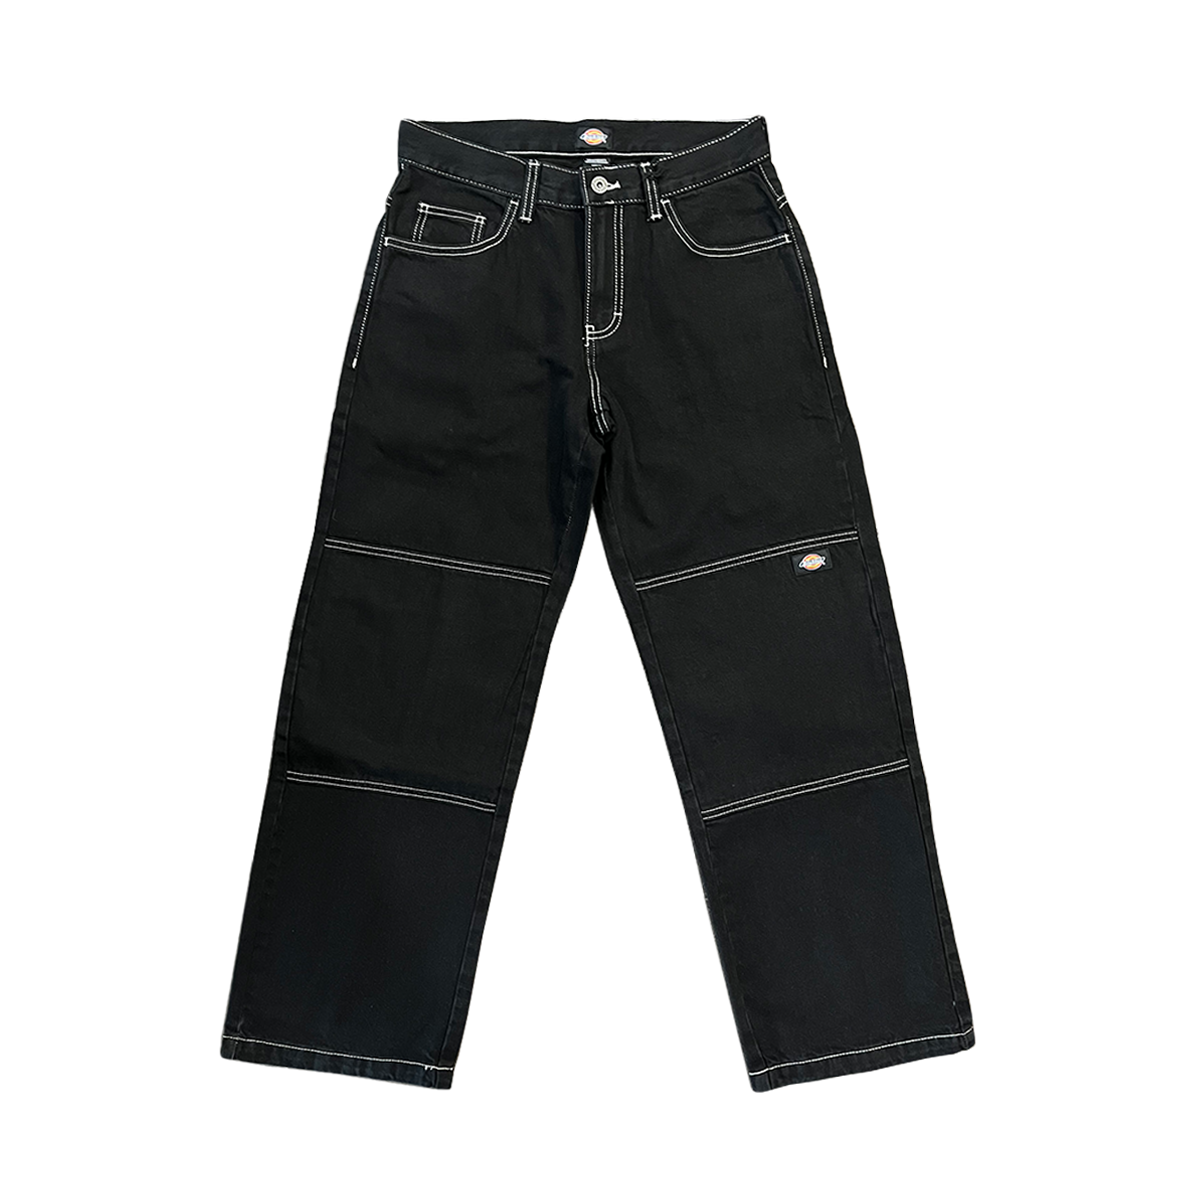 Dickies Woven Denim Jeans - Black